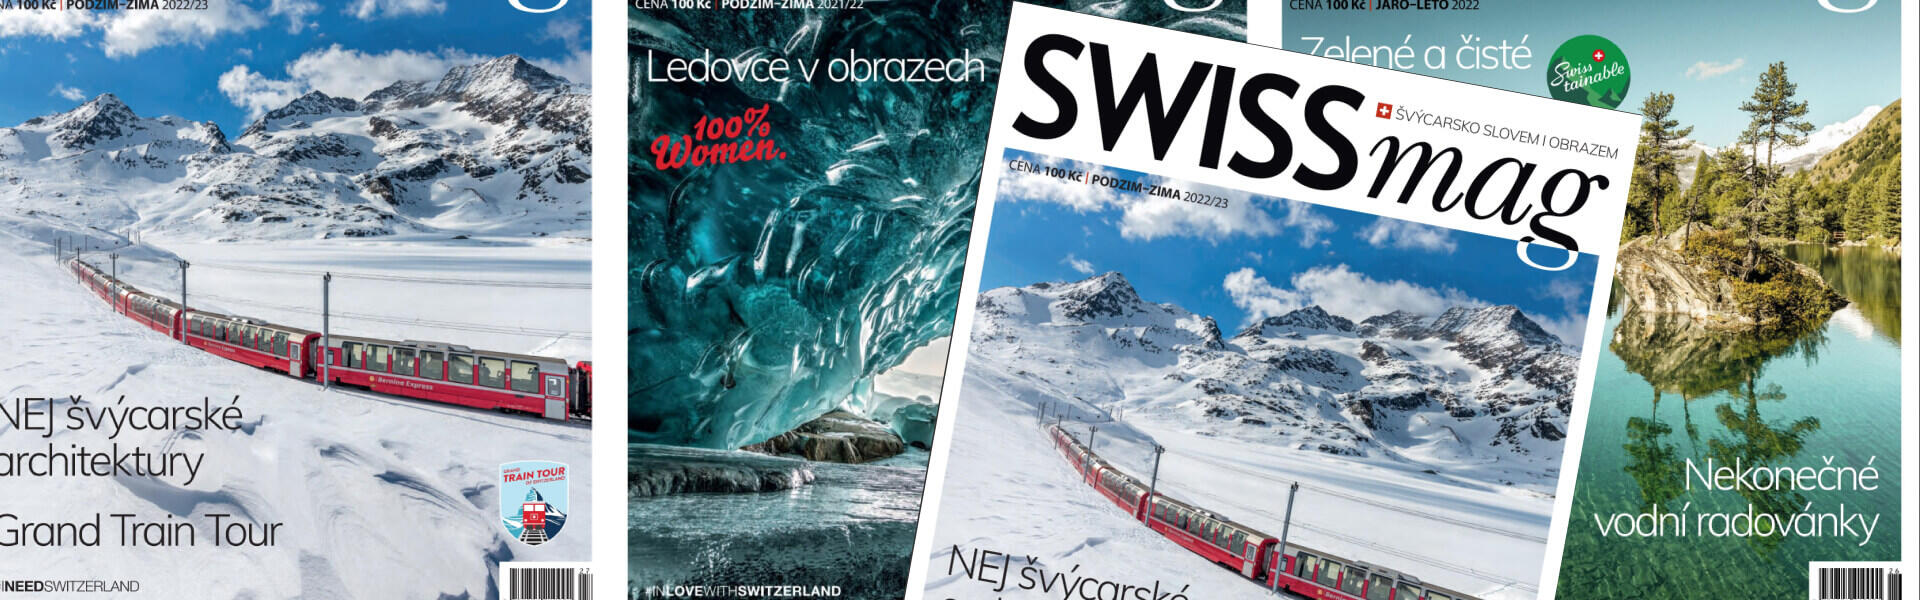 Alpenverein OEAV.CZ magazín SWISSmag